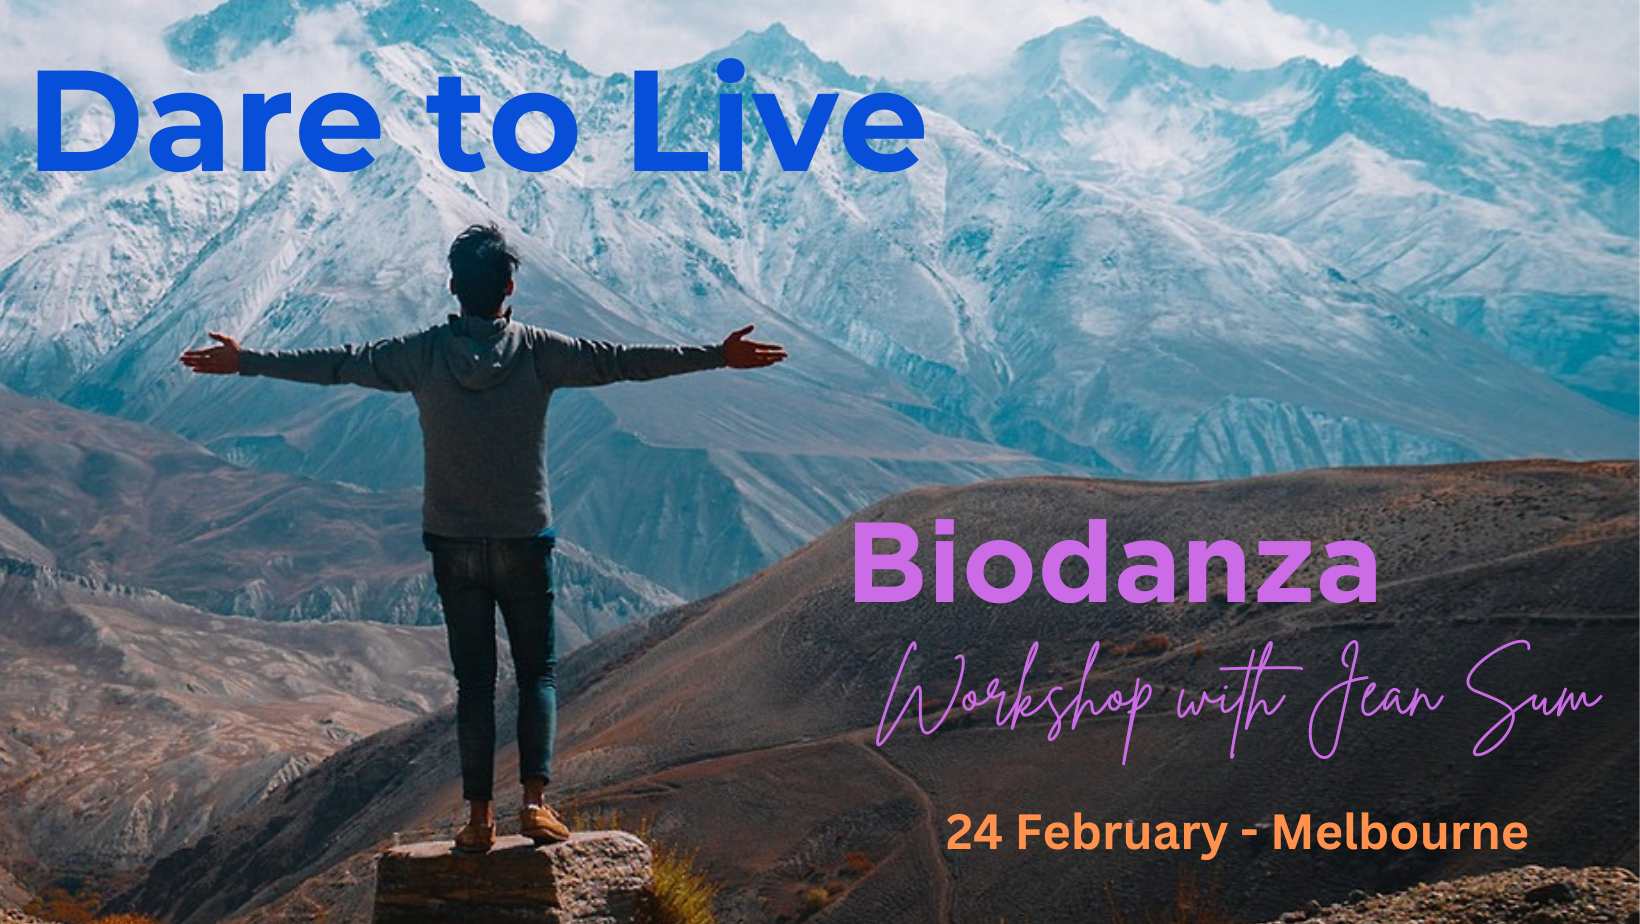 Dare to Live - Melbourne Biodanza Workshop - 24 February. Embrace your Courage & Vulnerability